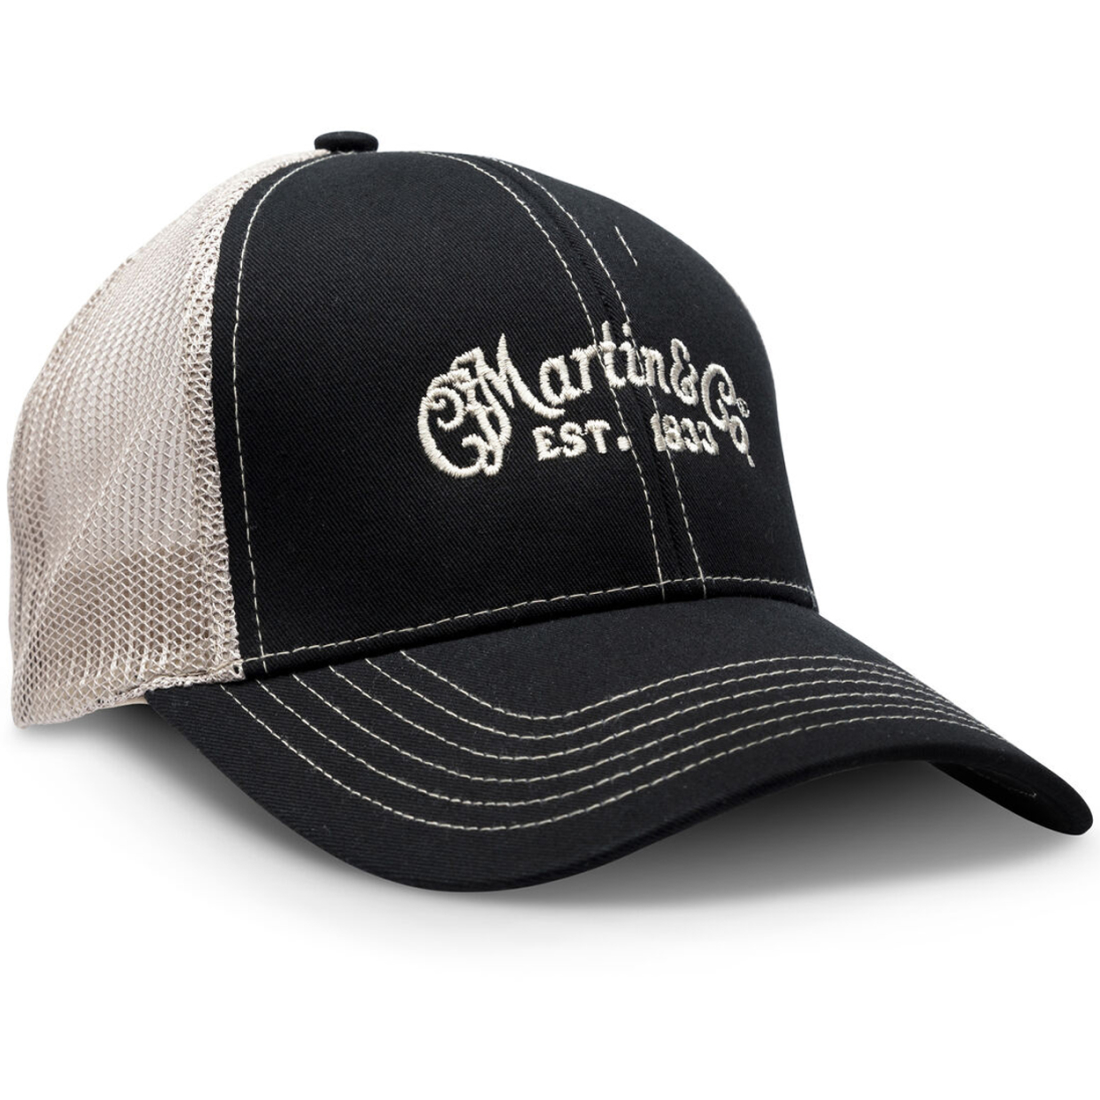 Mesh Trucker Hat with Martin Logo - Black/Tan